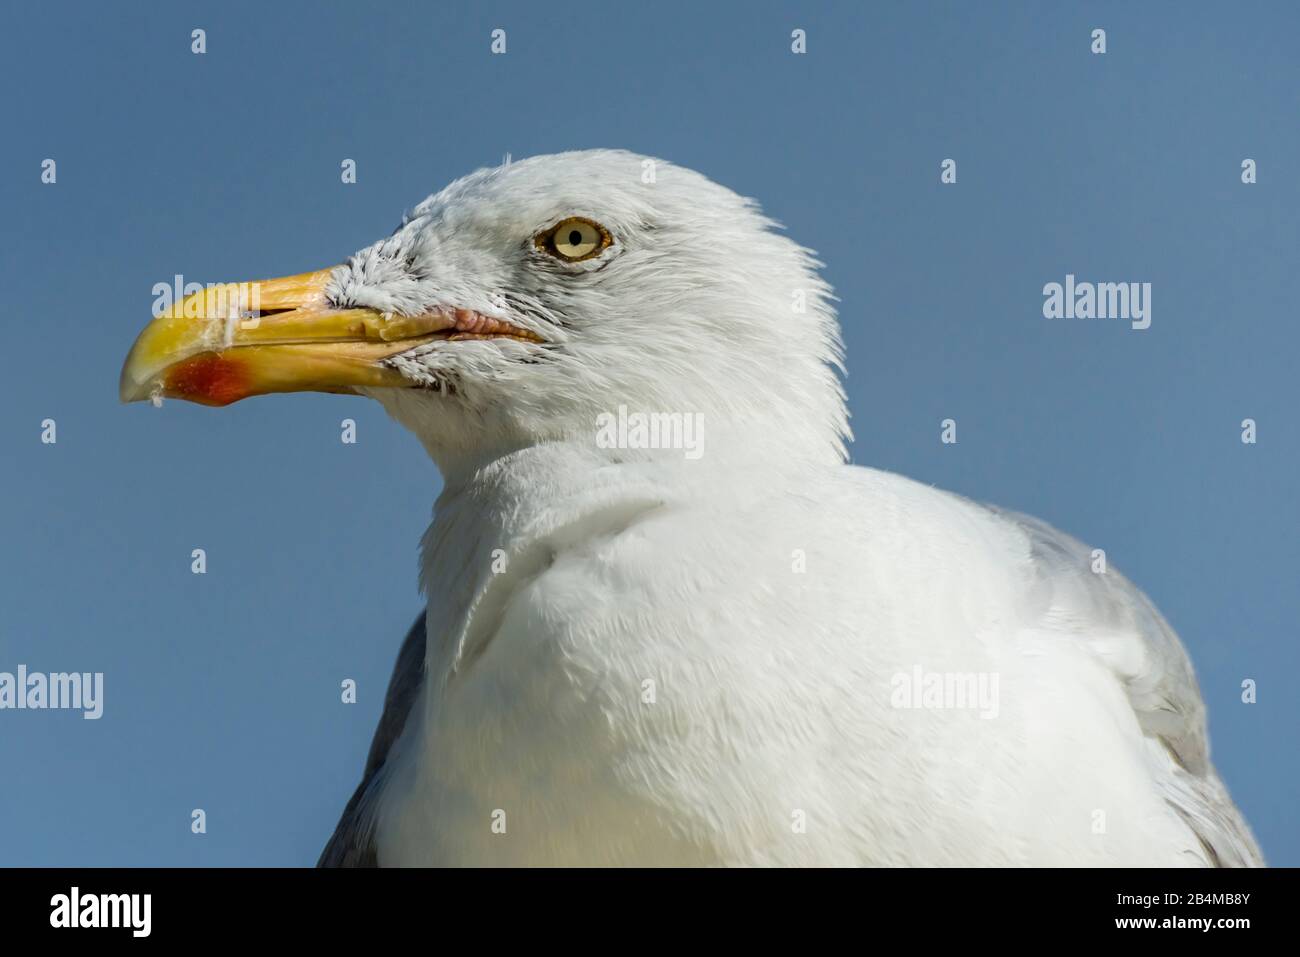 Germany, Lower Saxony, North Sea, East Frisian Islands, Wadden Sea National Park, Borkum, close-up head of a seagull with a yellow beak Stock Photo